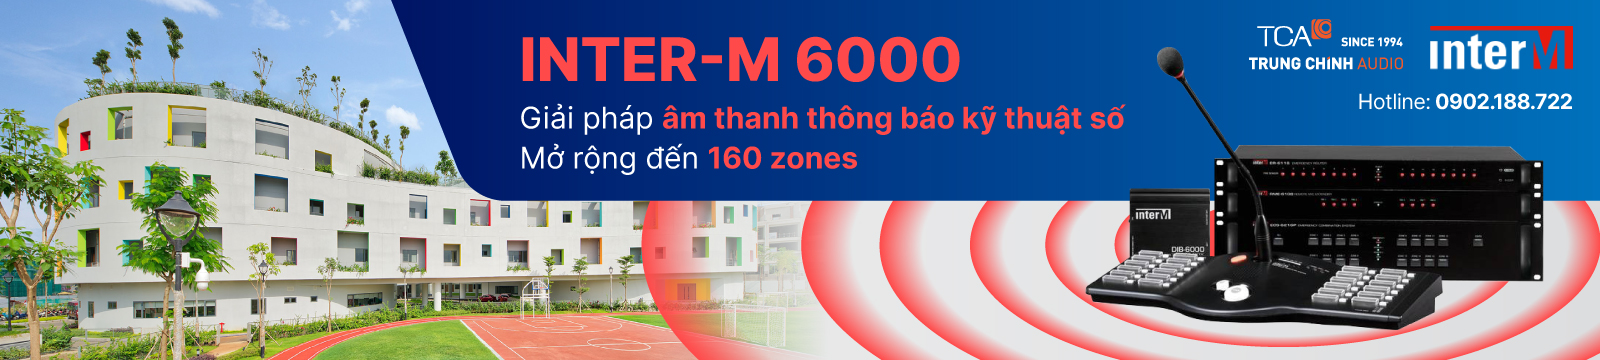 he-thong-am-thanh-thong-bao-inter-m-6000